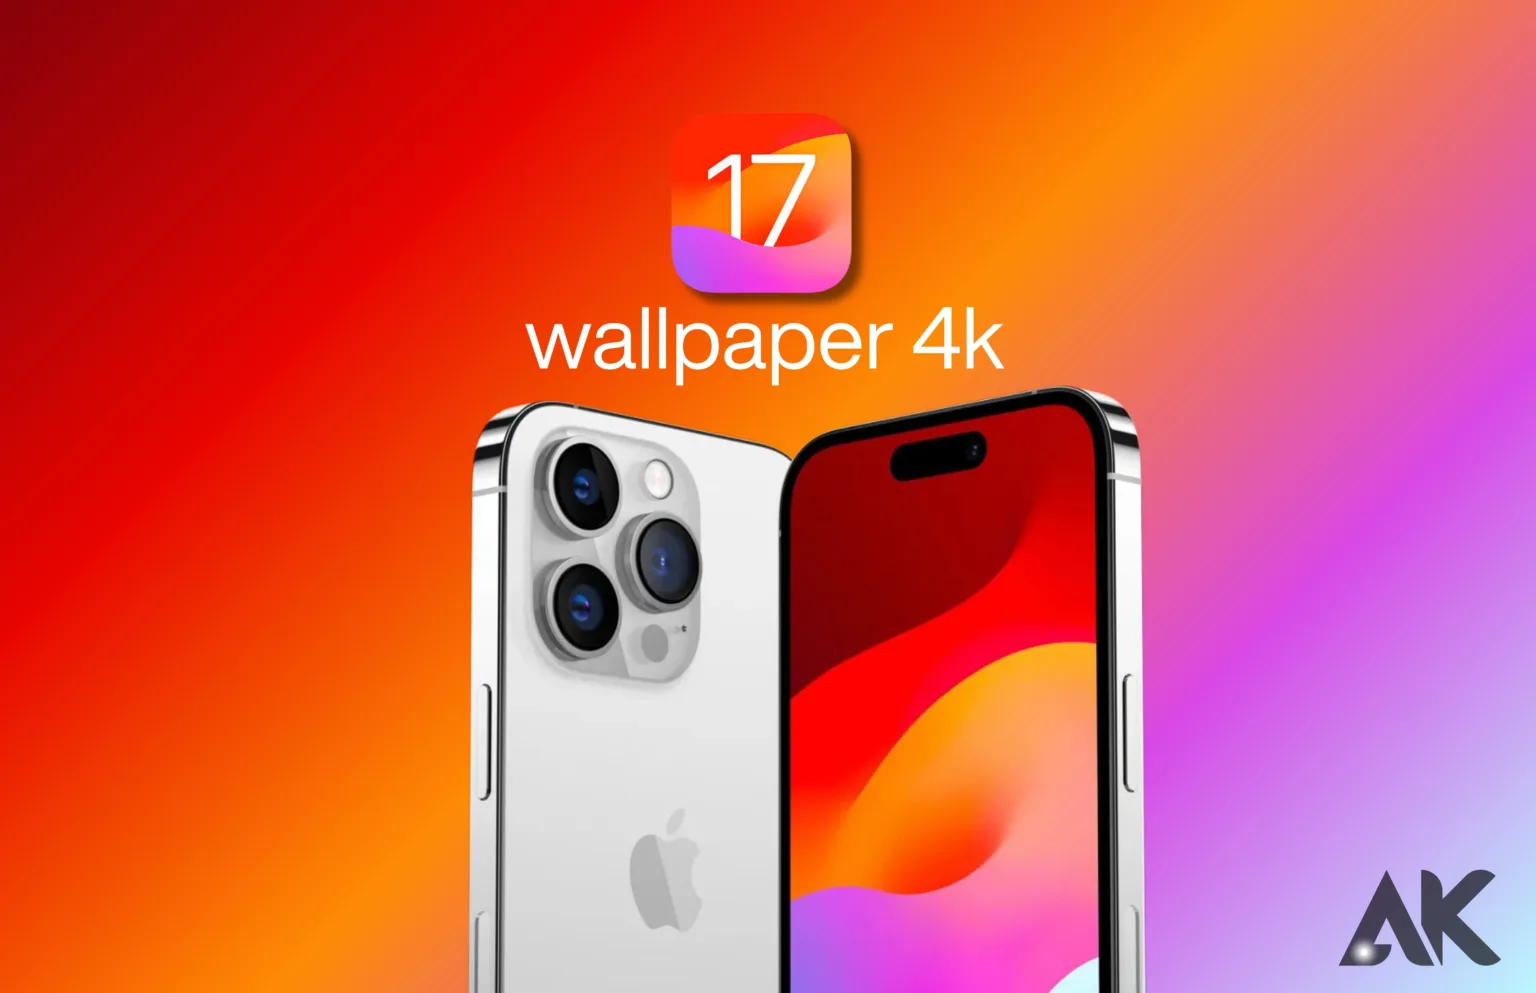 Apple IOS 17 wallpaper 4k - Grab it now!